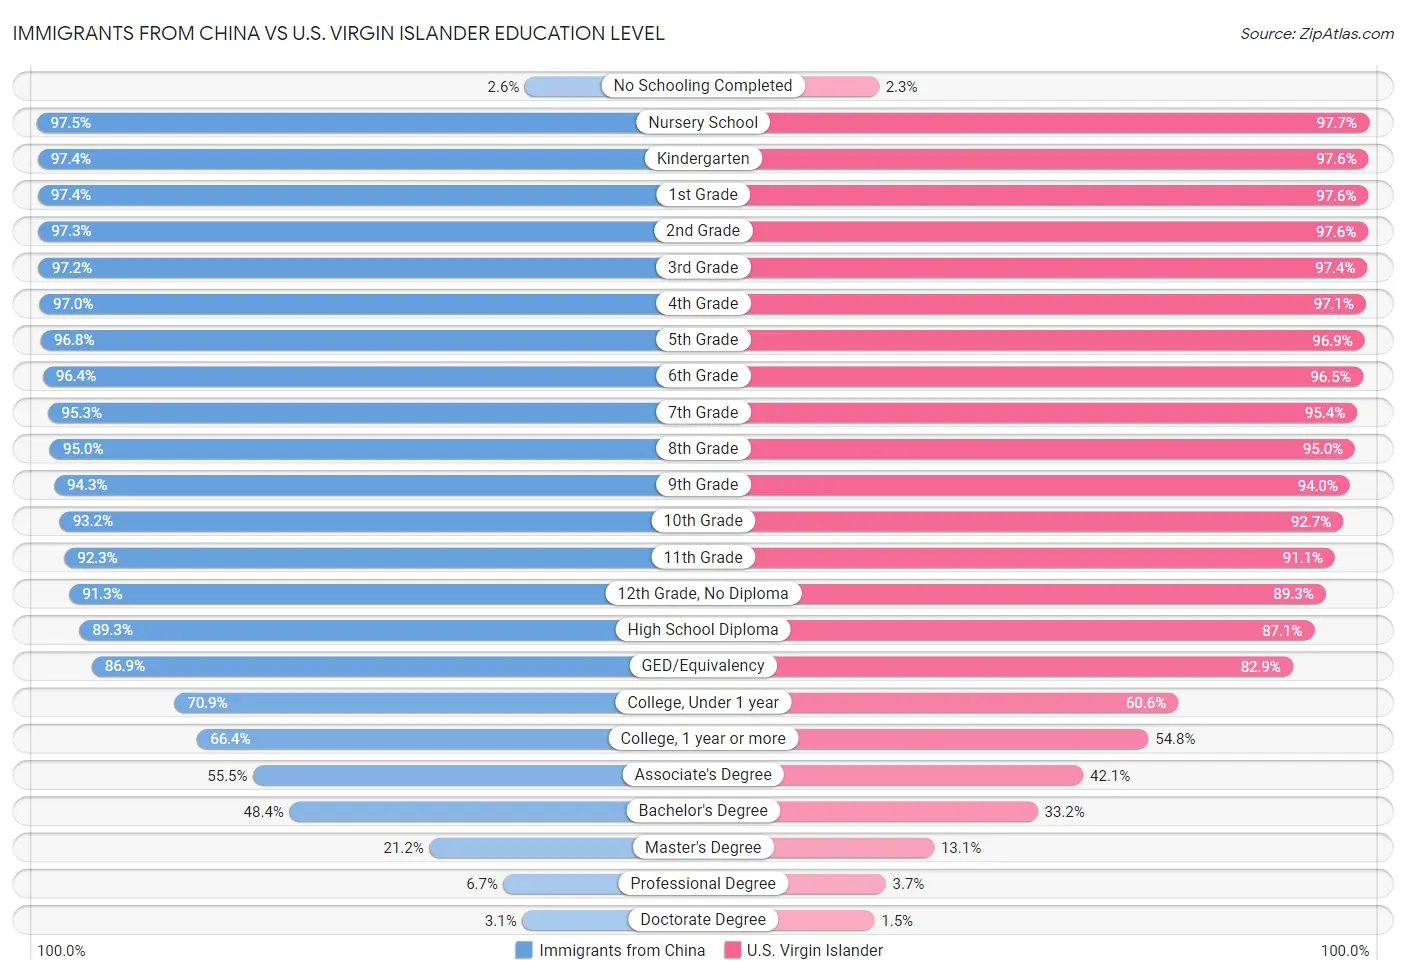 Immigrants from China vs U.S. Virgin Islander Education Level